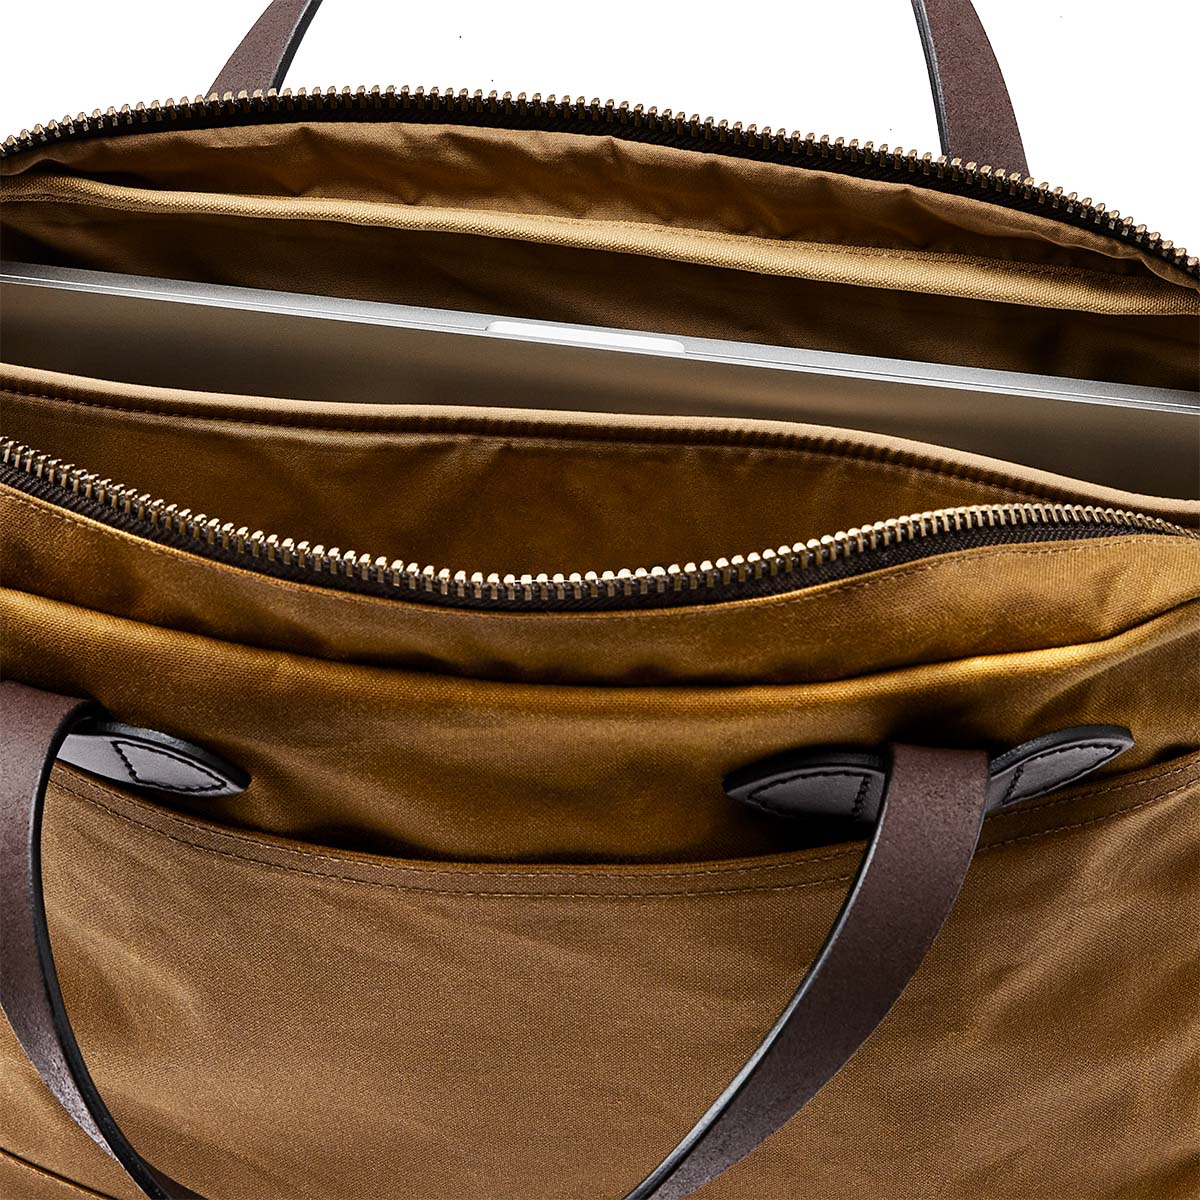 Filson Tin Cloth Compact Briefcase Dark Tan, perfect bag for a business trip